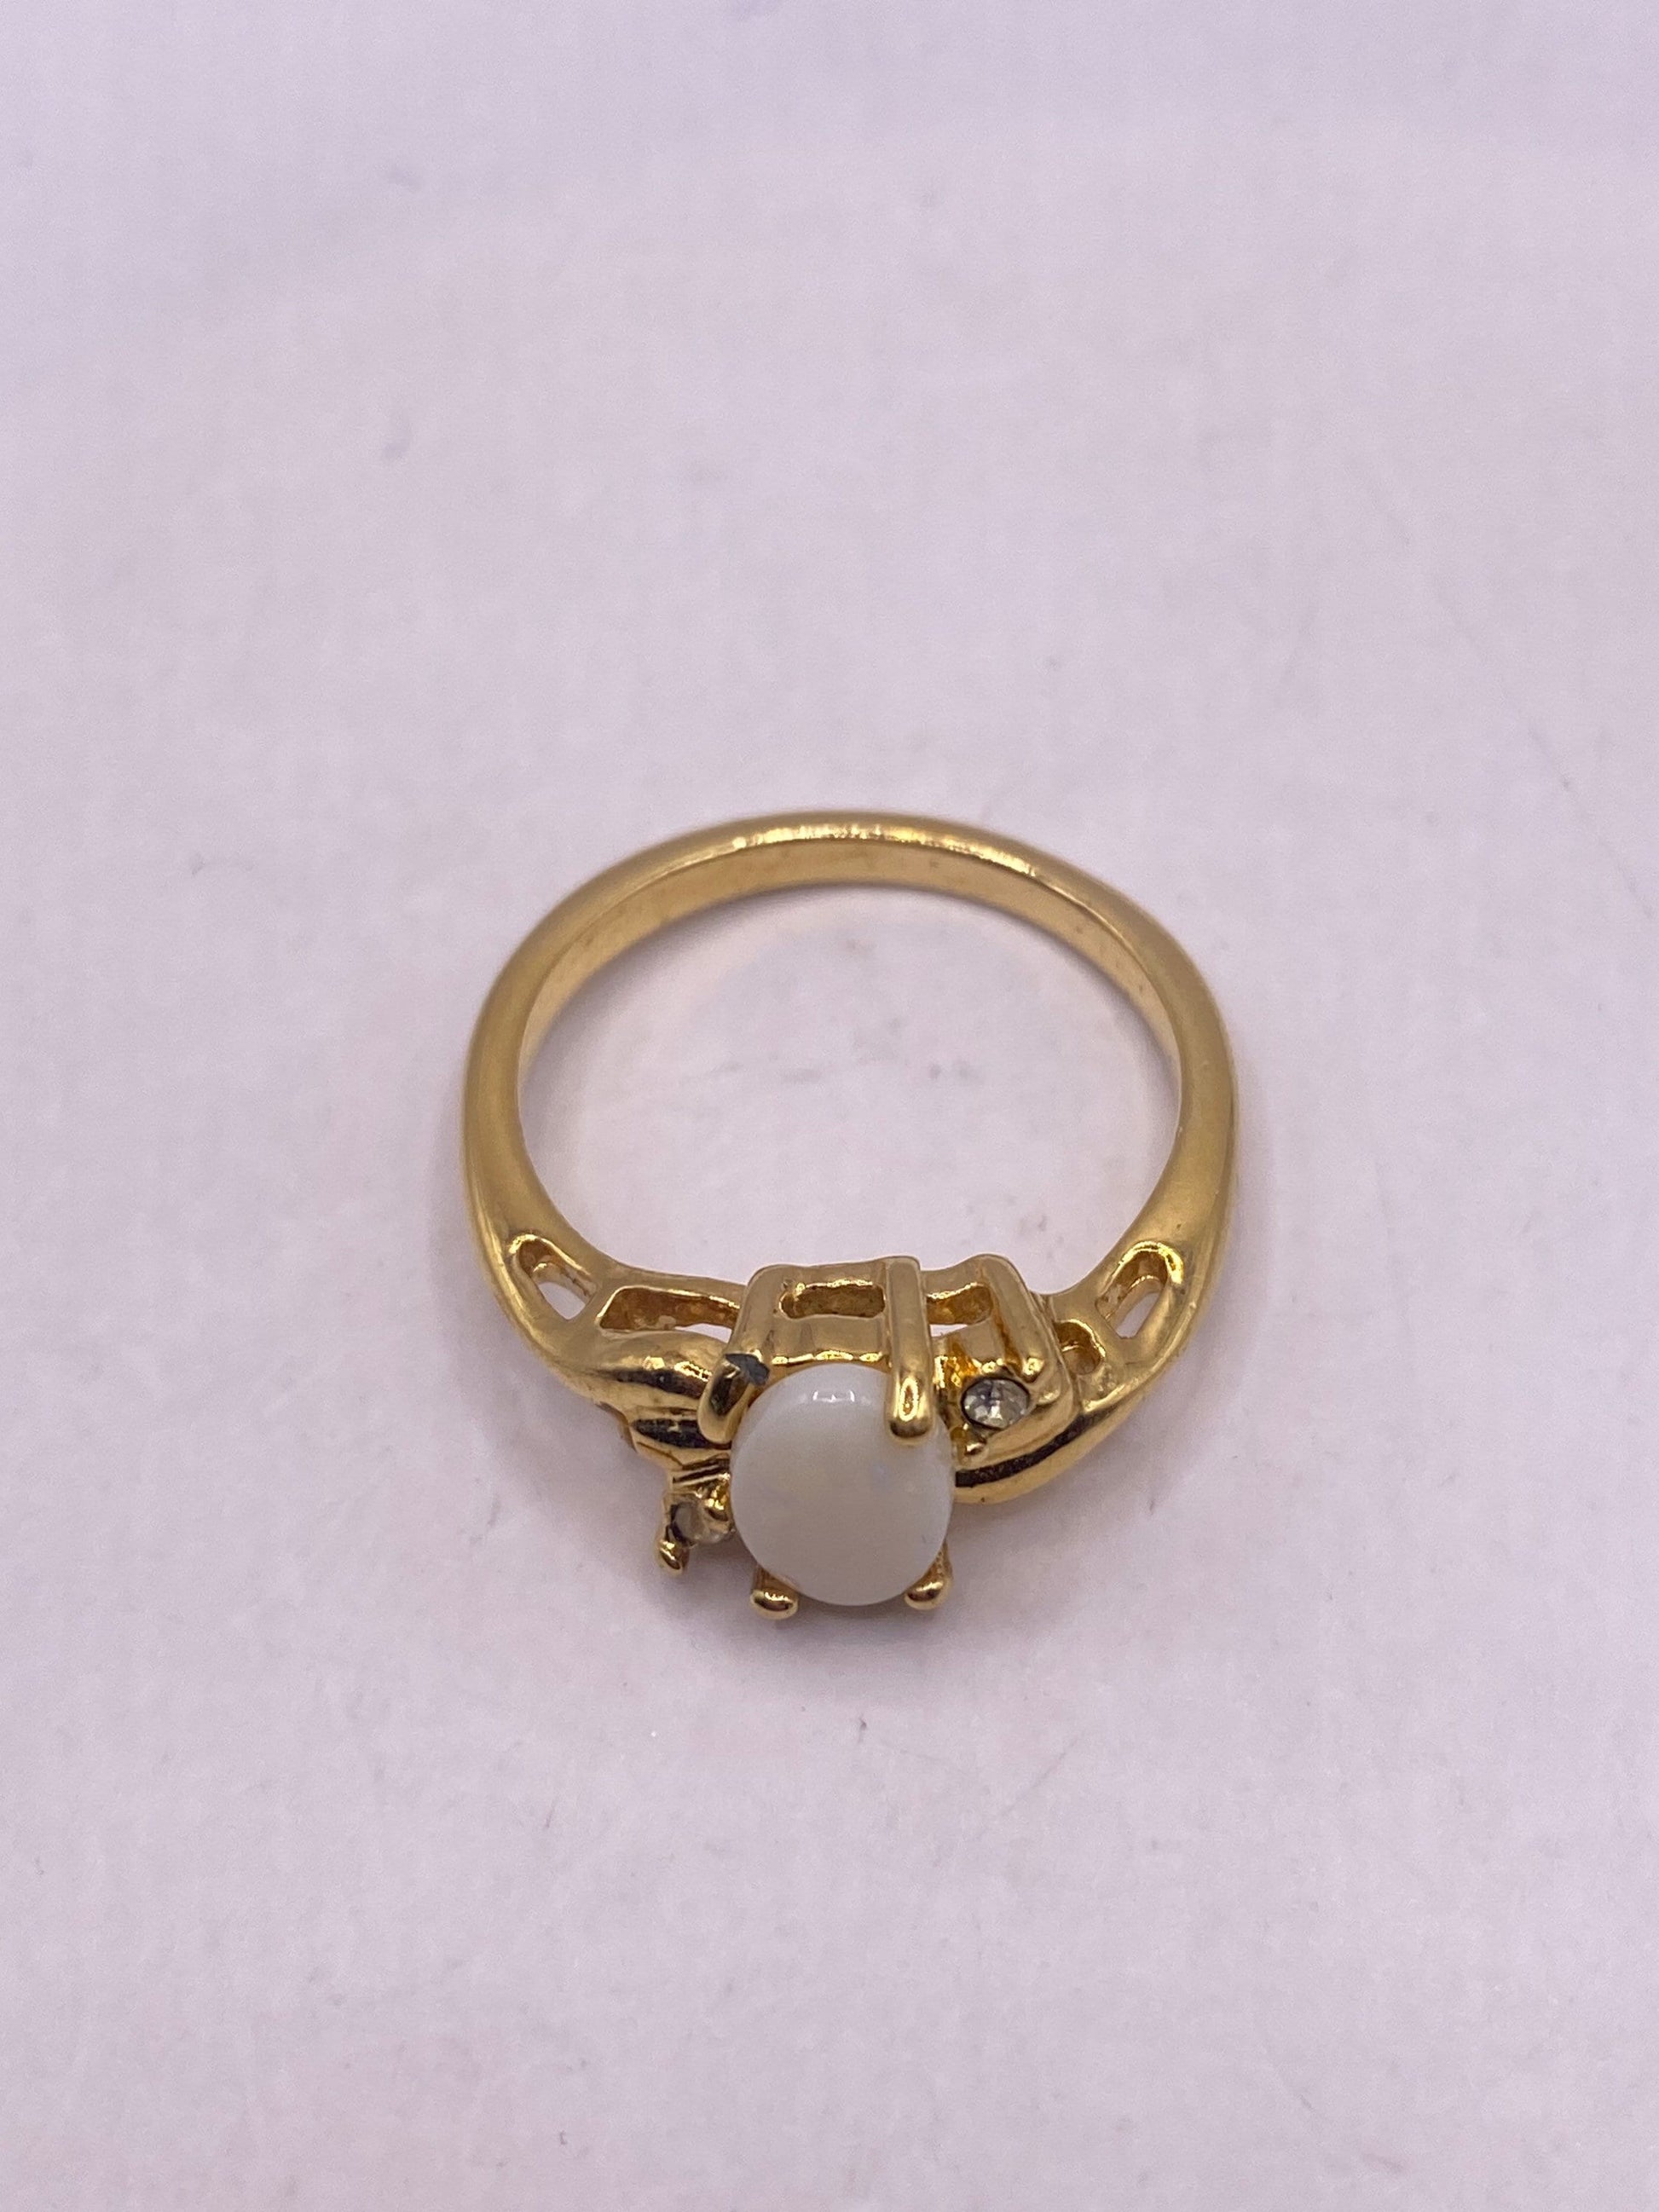 Vintage White Opal Wedding Band 9k Gold Filled Ring